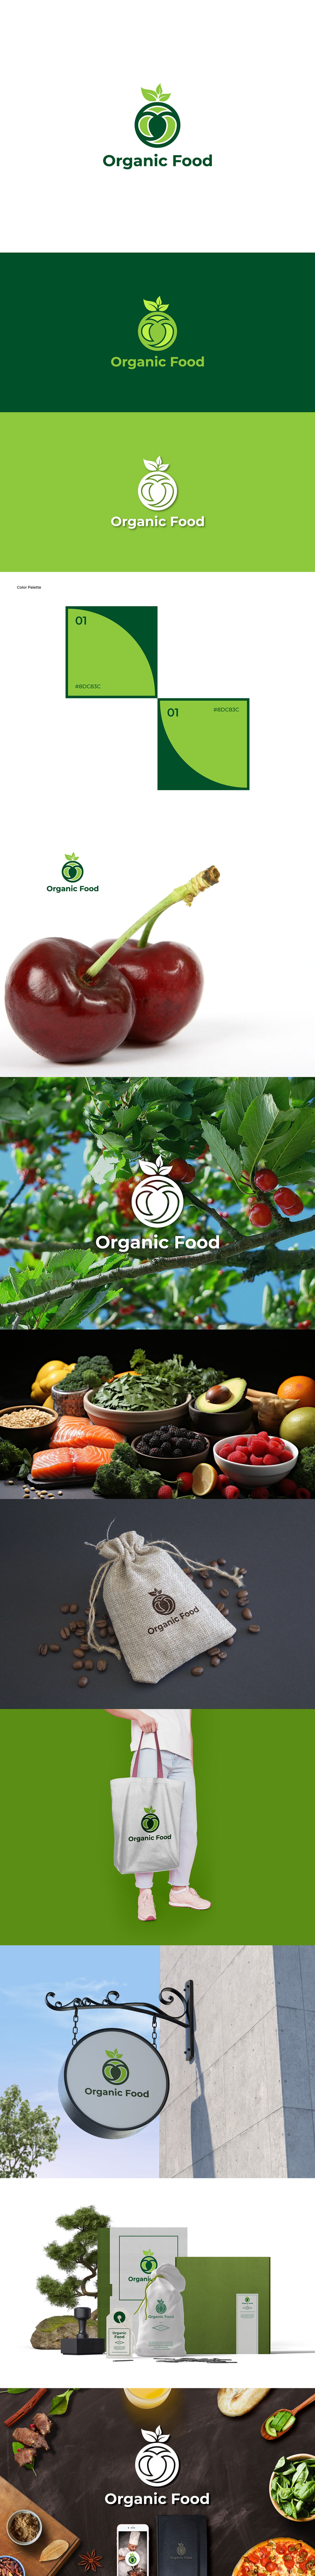 organic food logo,
food logo,
organic label,
organic product,
green,
eco,
food leaf,
healthy,
green 